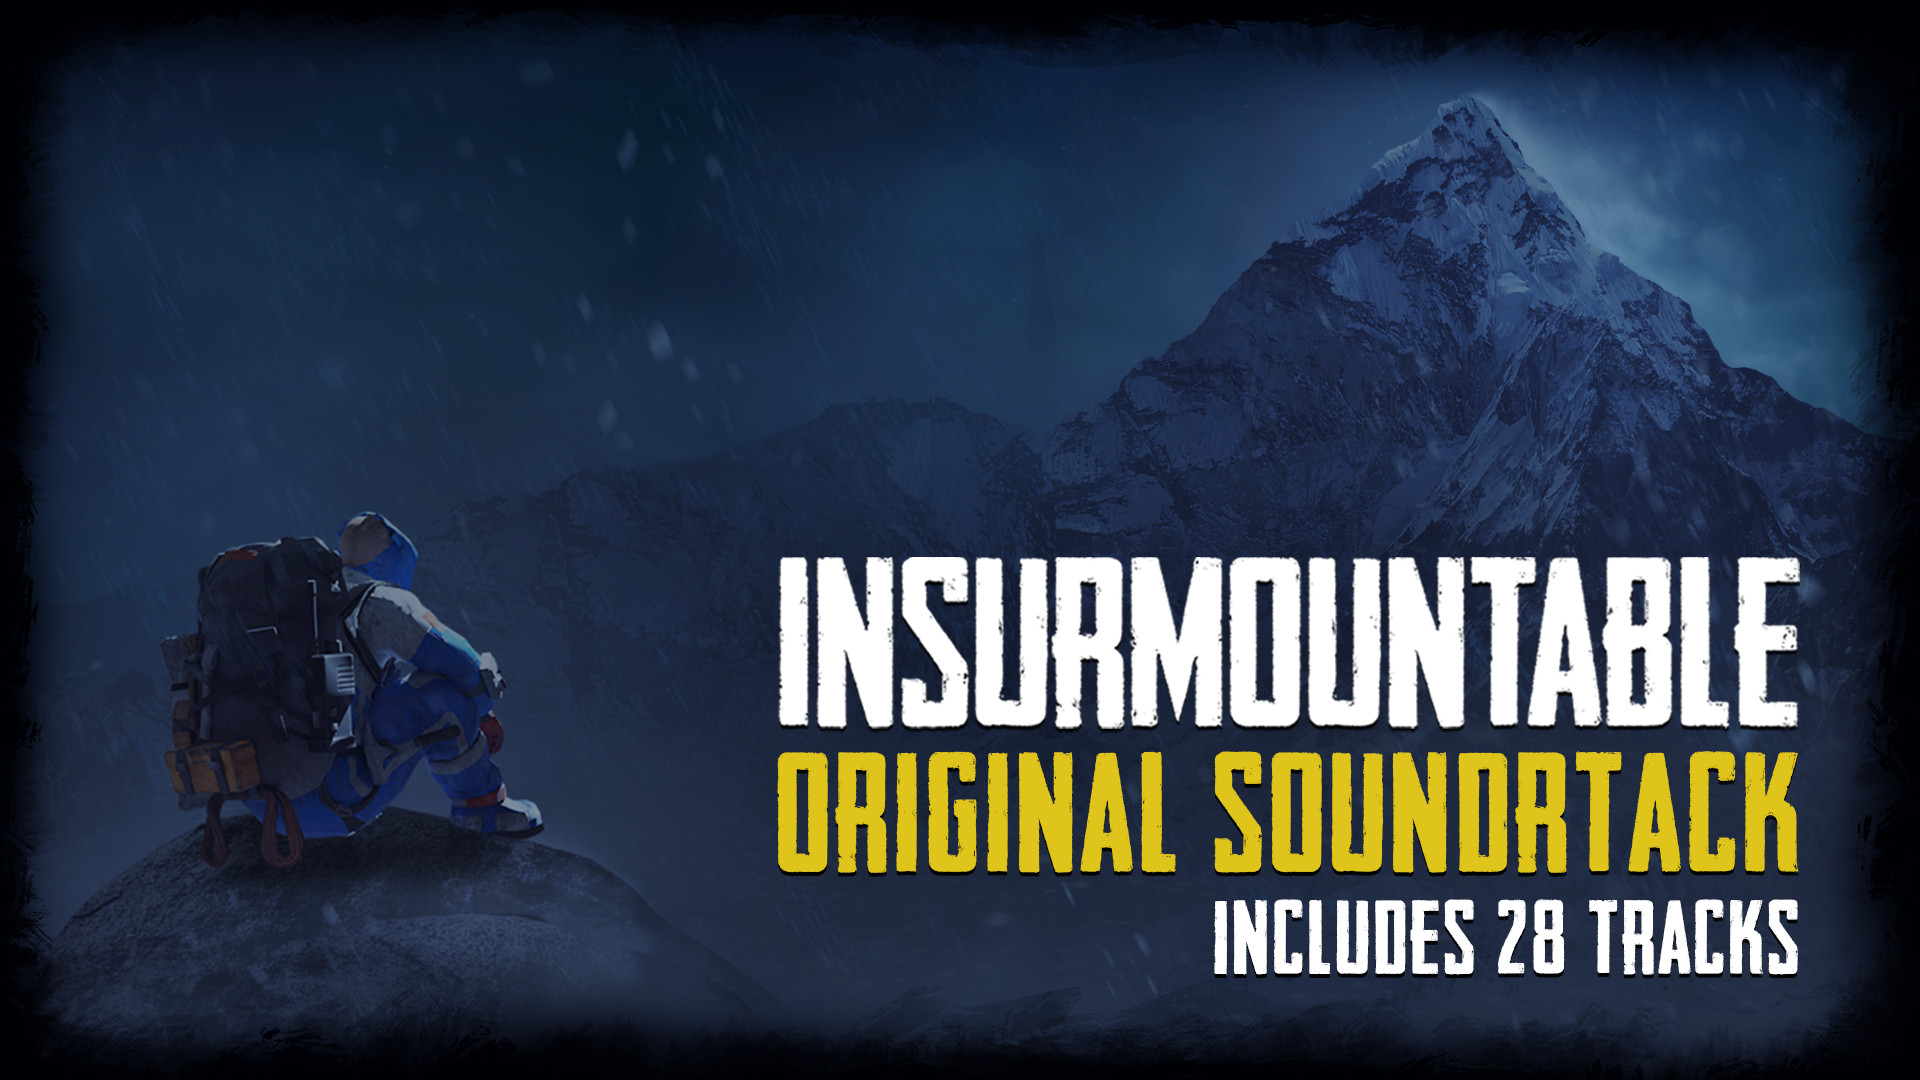 Insurmountable Soundtrack Featured Screenshot #1